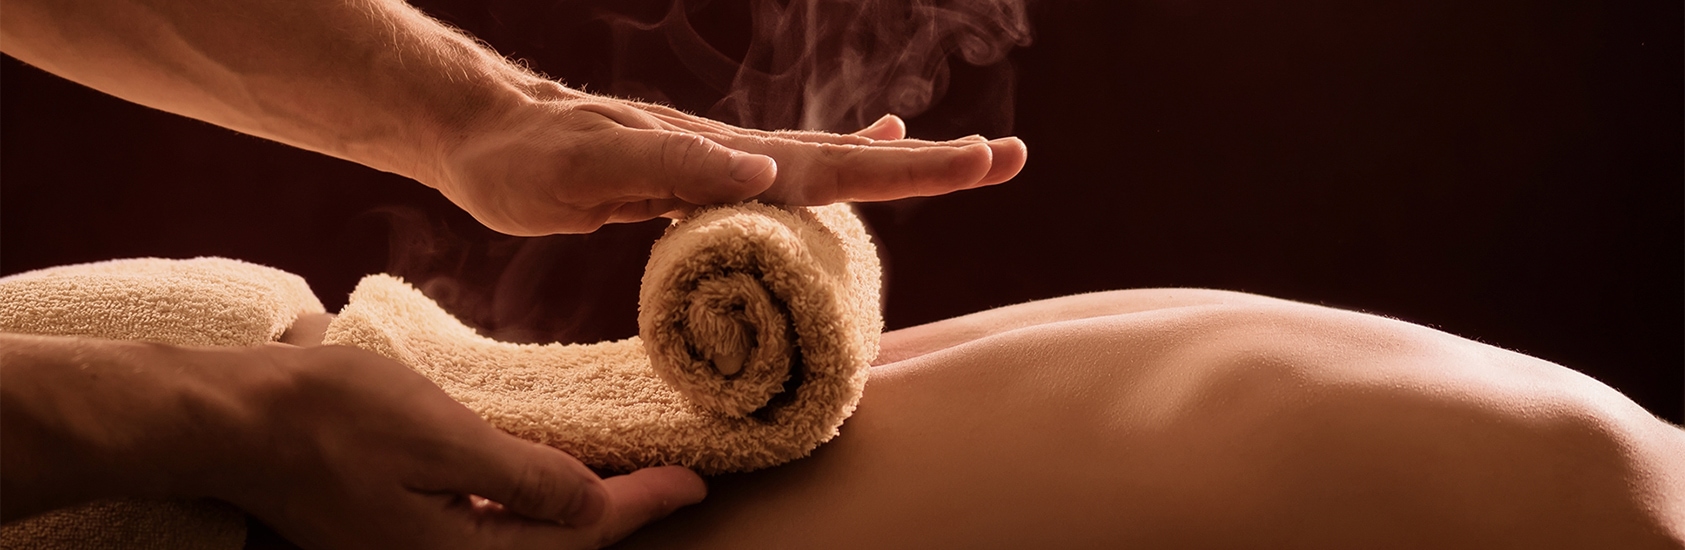 Massage médical Tui Na en Médecine Traditionnelle Chinoise